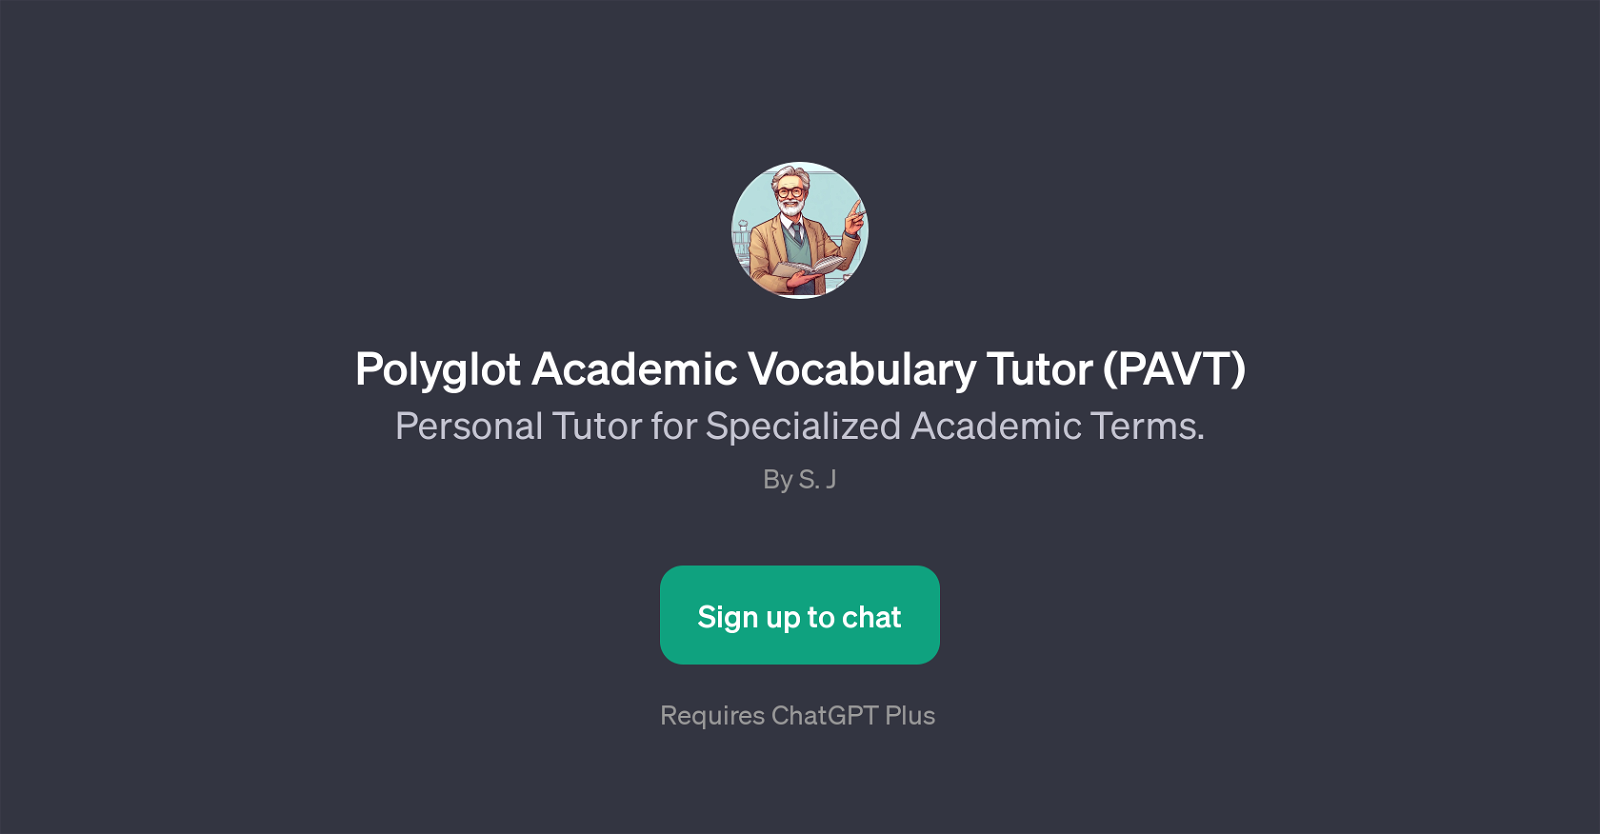 Polyglot Academic Vocabulary Tutor (PAVT) website